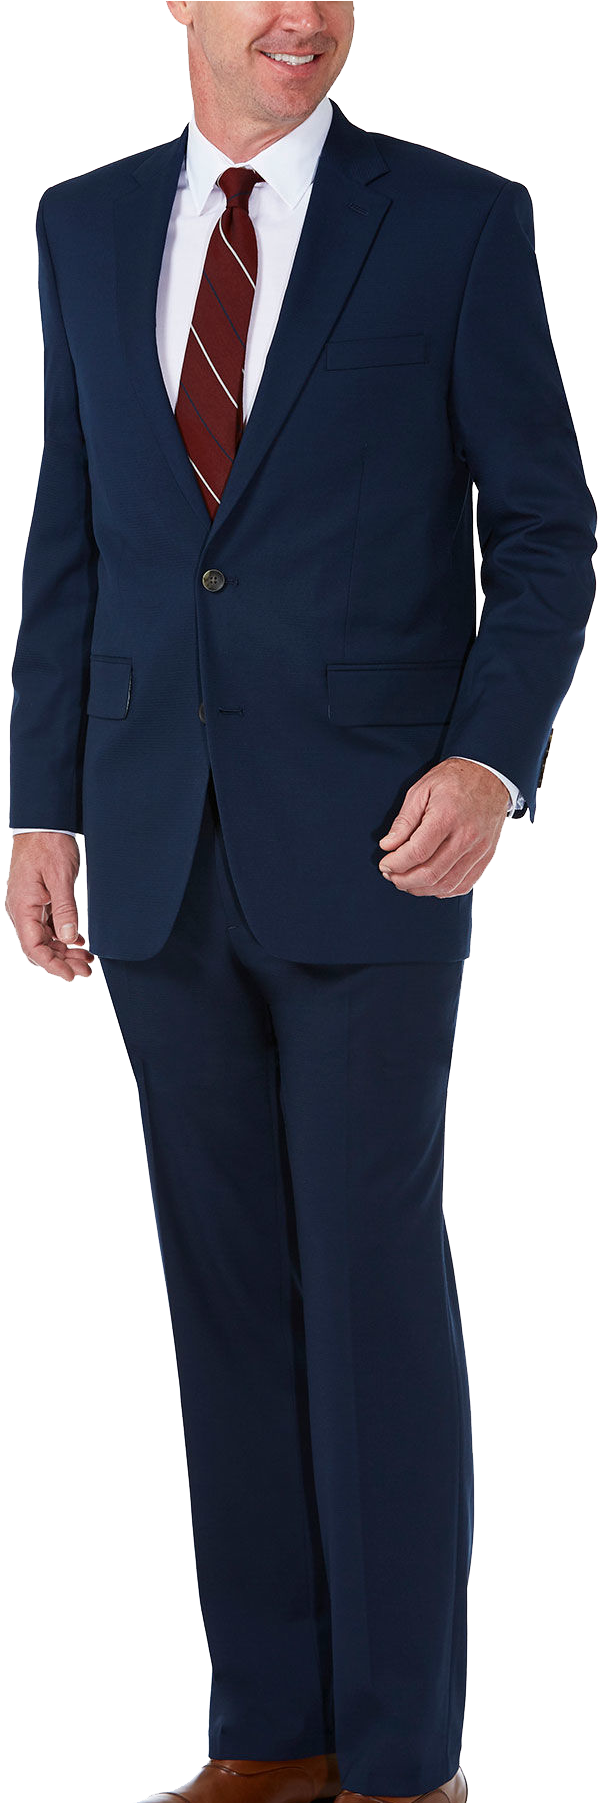 Professional Manin Navy Suit